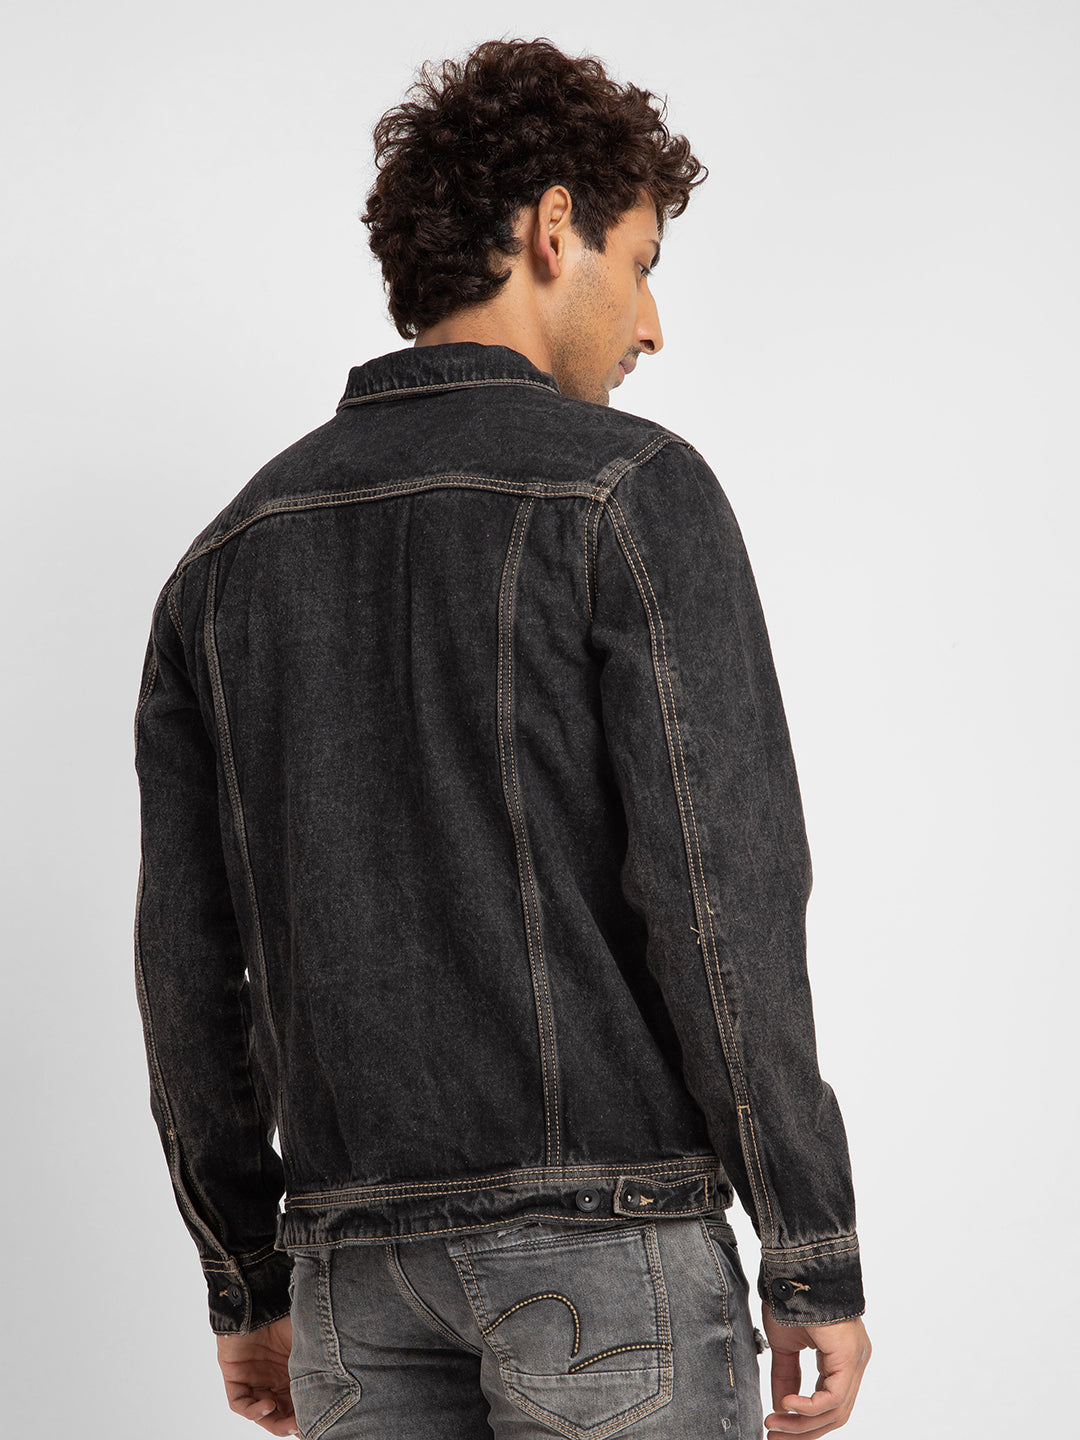 LONGBIDA Men's Casual Classic Denim Jacket Slim Fit Jean Coat(Black,Small)  at Amazon Men's Clothing store